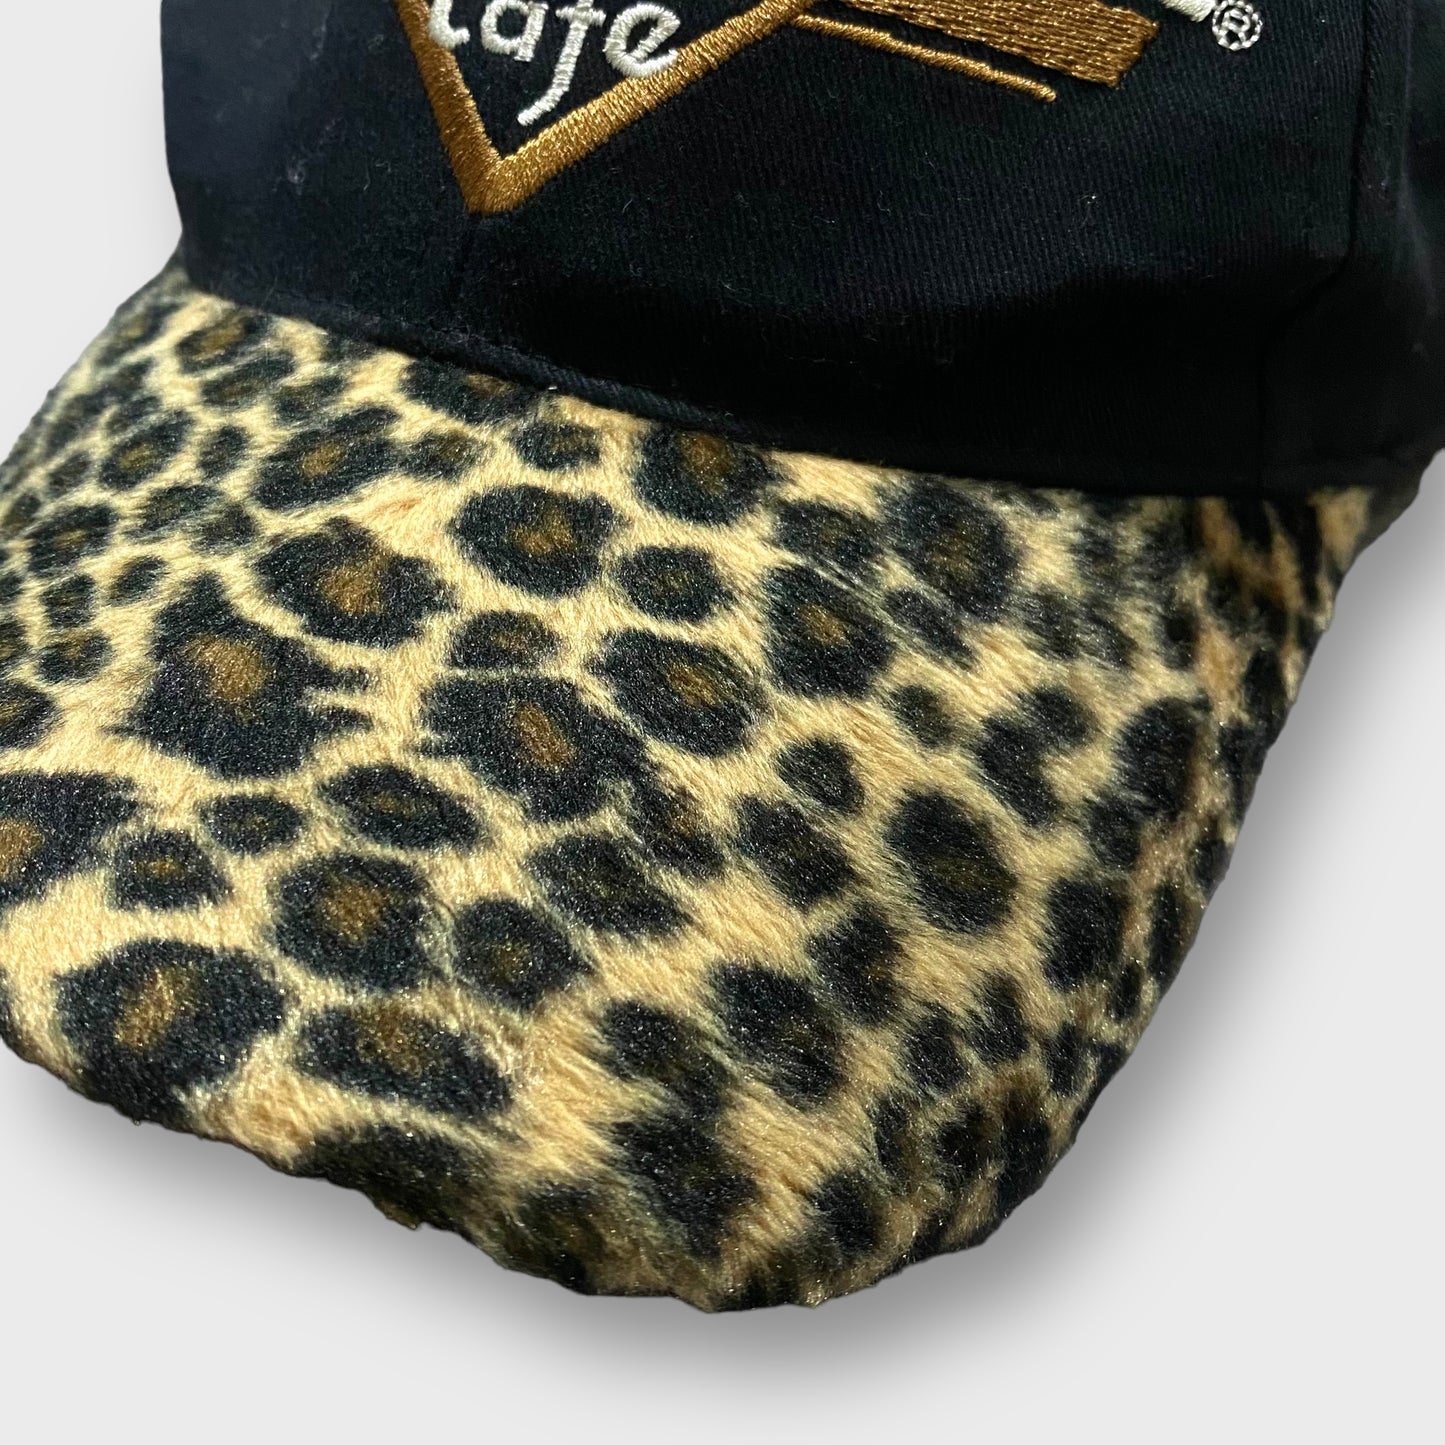 "Harley-Davidson" Leopard pattern cap